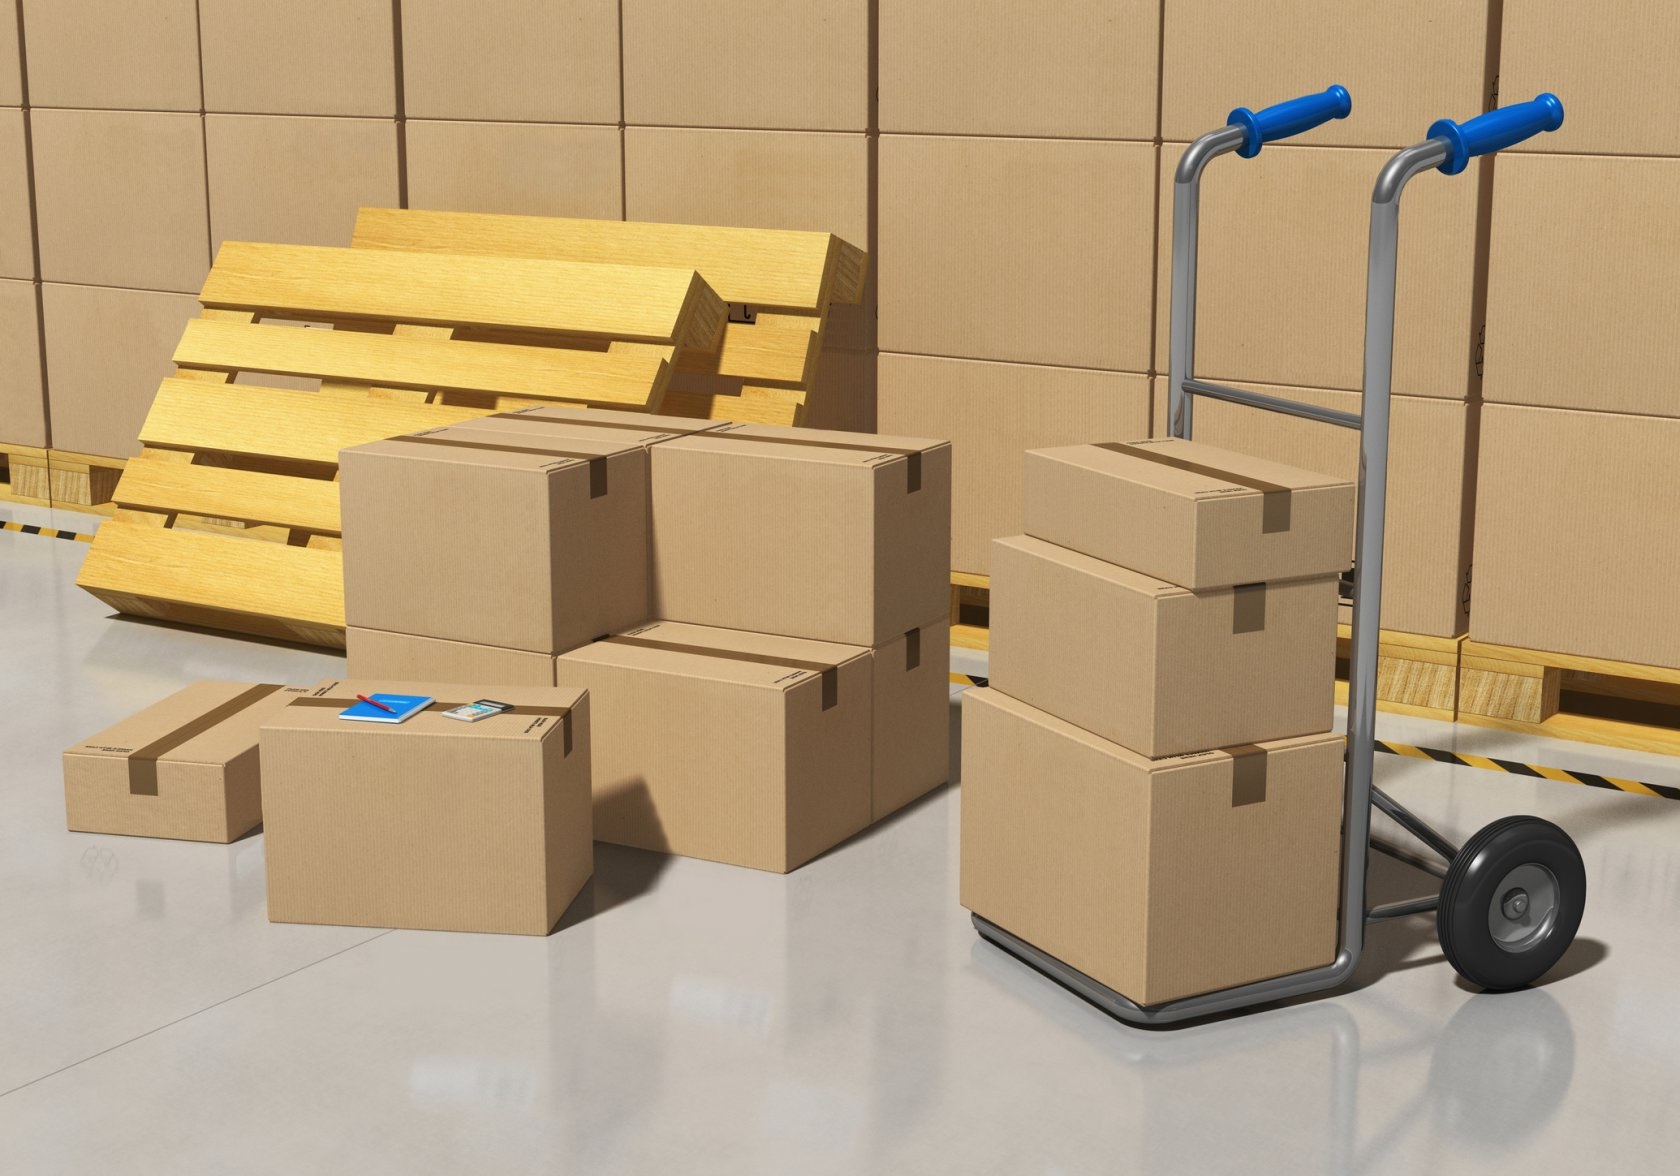 Перевозка и хранение грузов. Коробки на складе. Упаковка для транспортировки. Картонные коробки склад.